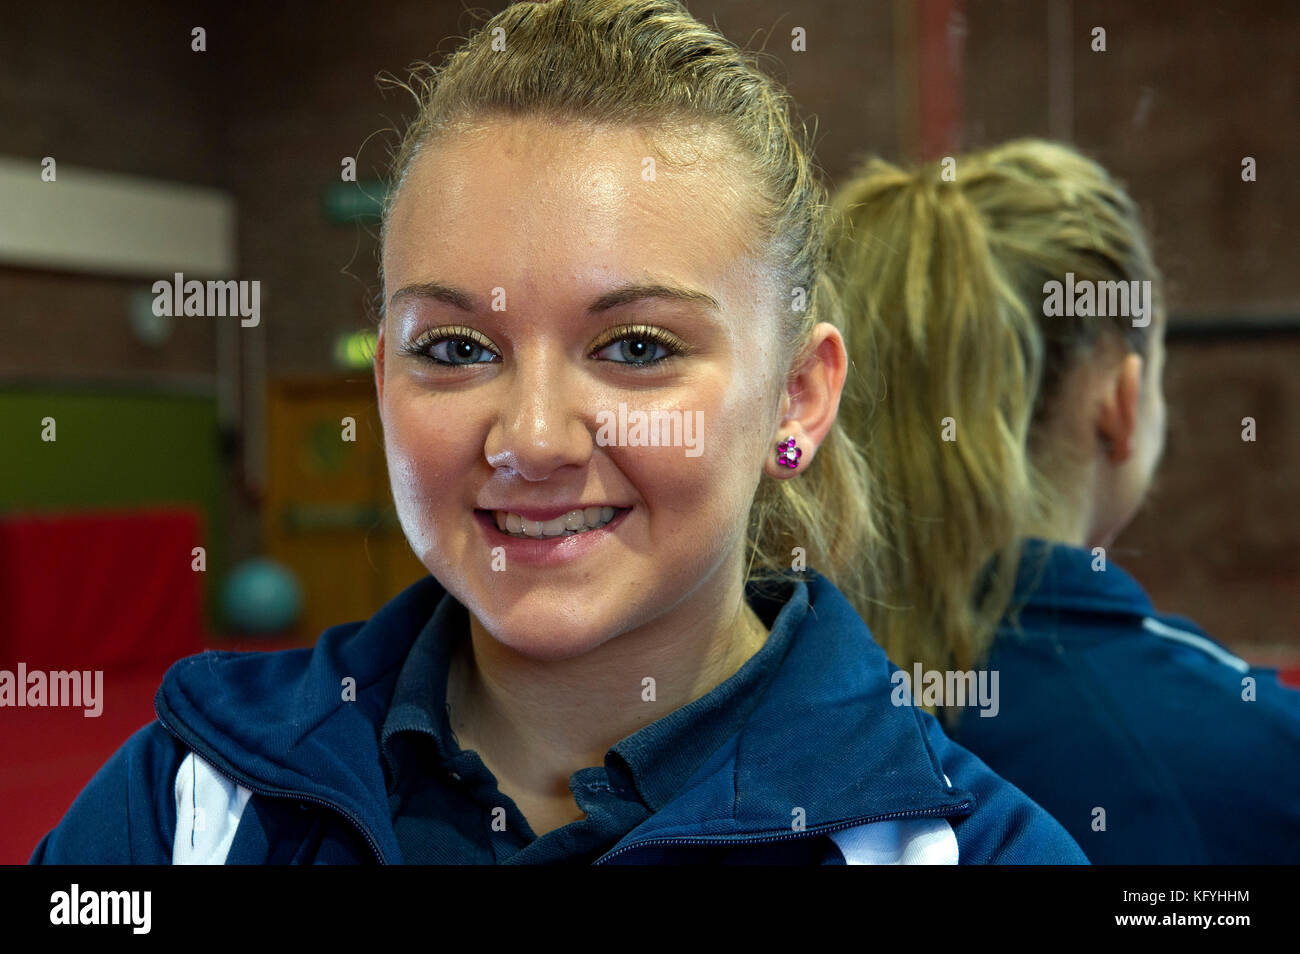 Welsh olympischer Gymnast, Jessica Hogg. Stockfoto